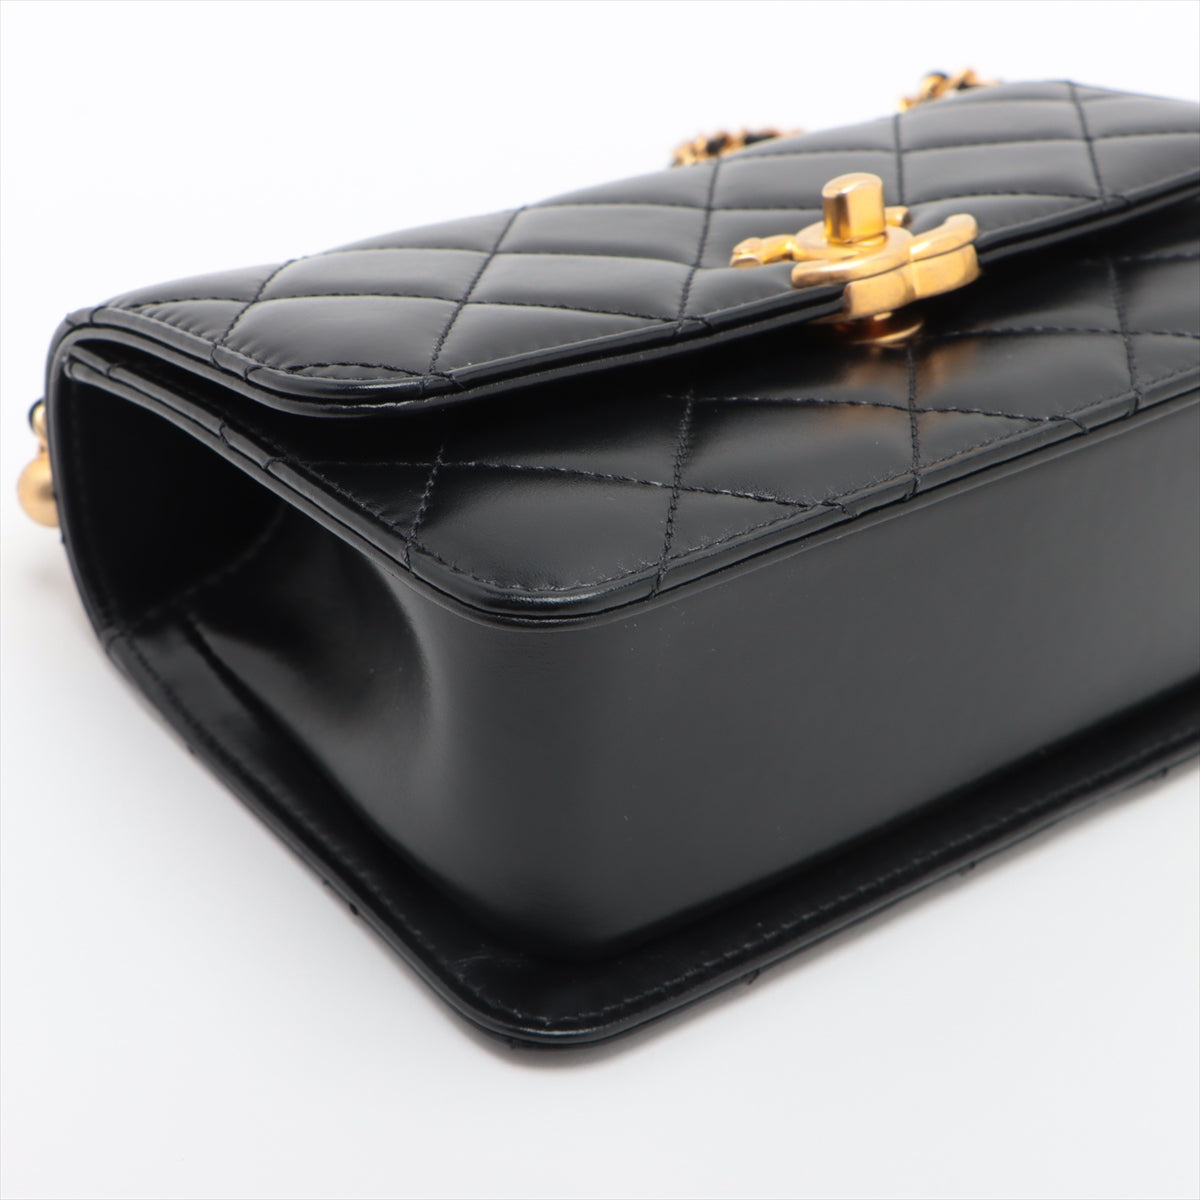 Chanel Matelasse Lambskin Chain shoulder bag Black Gold Metal fittings AS2615